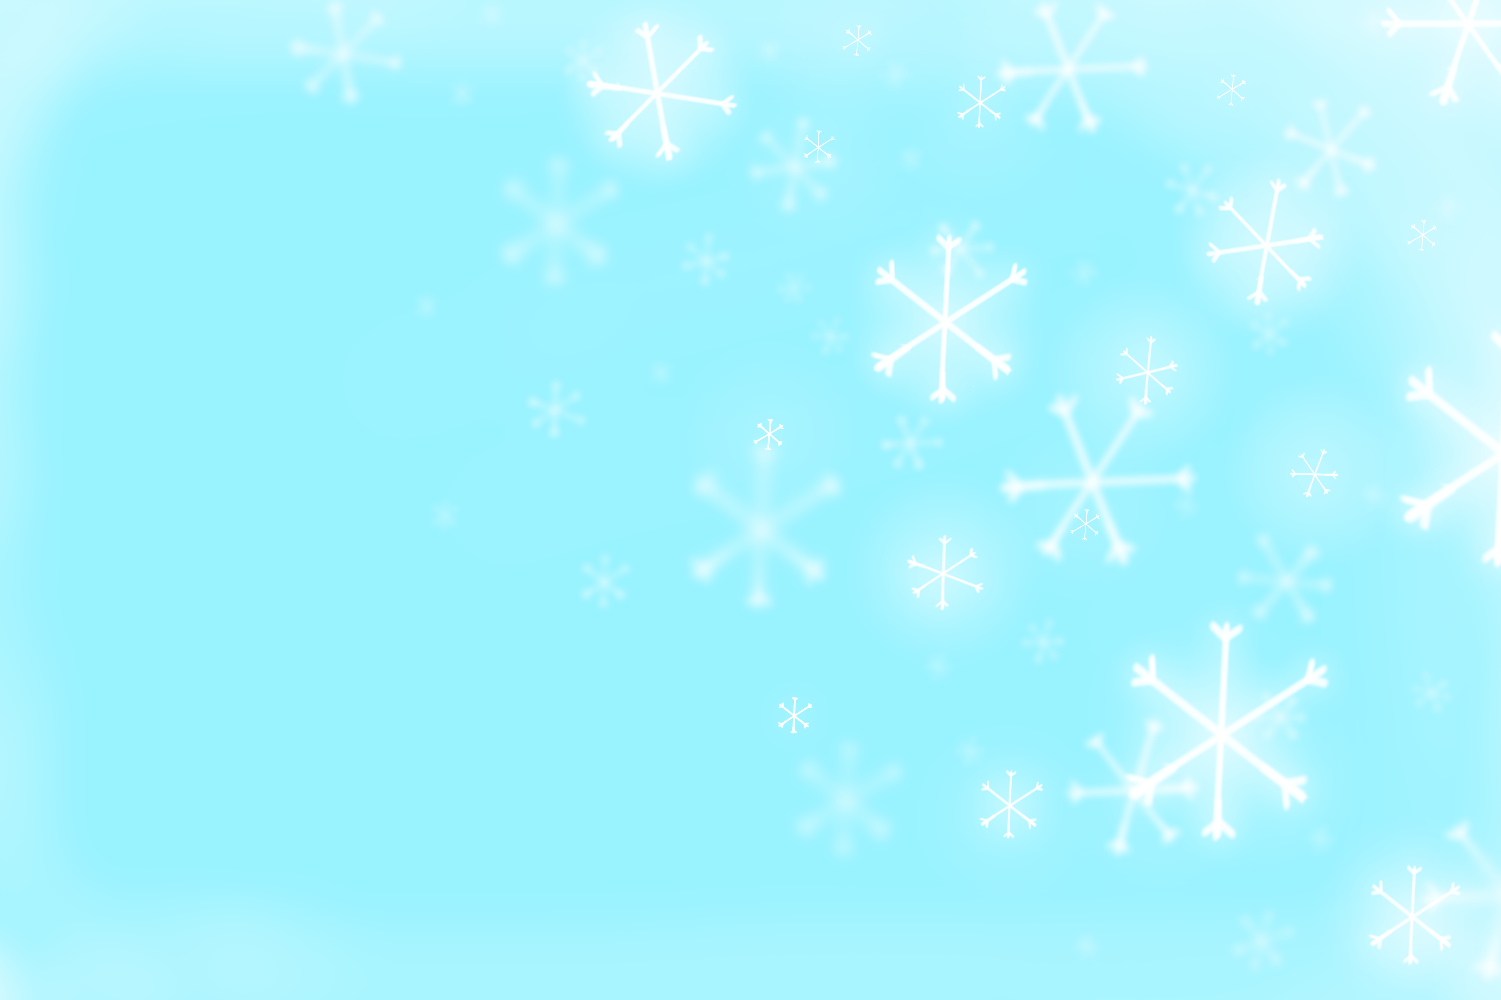 Snowflakes (christmas Background)